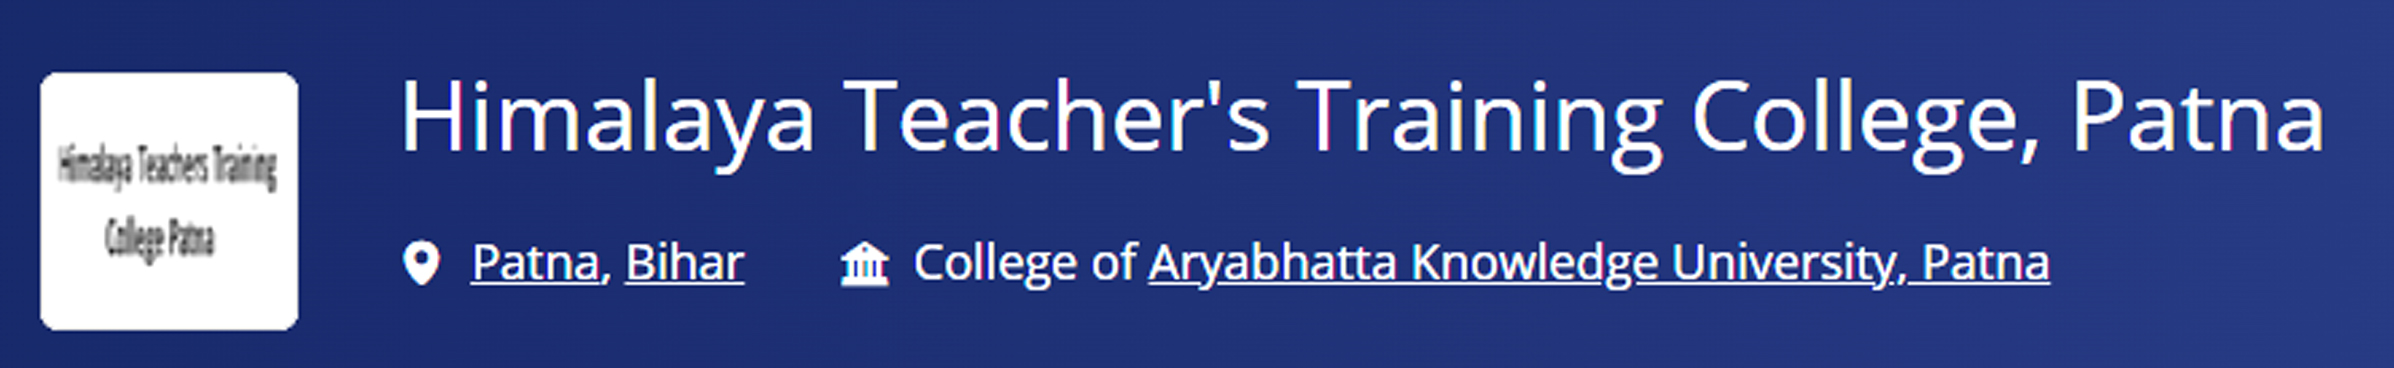 Himalaya Teacher’s Training College, Patna